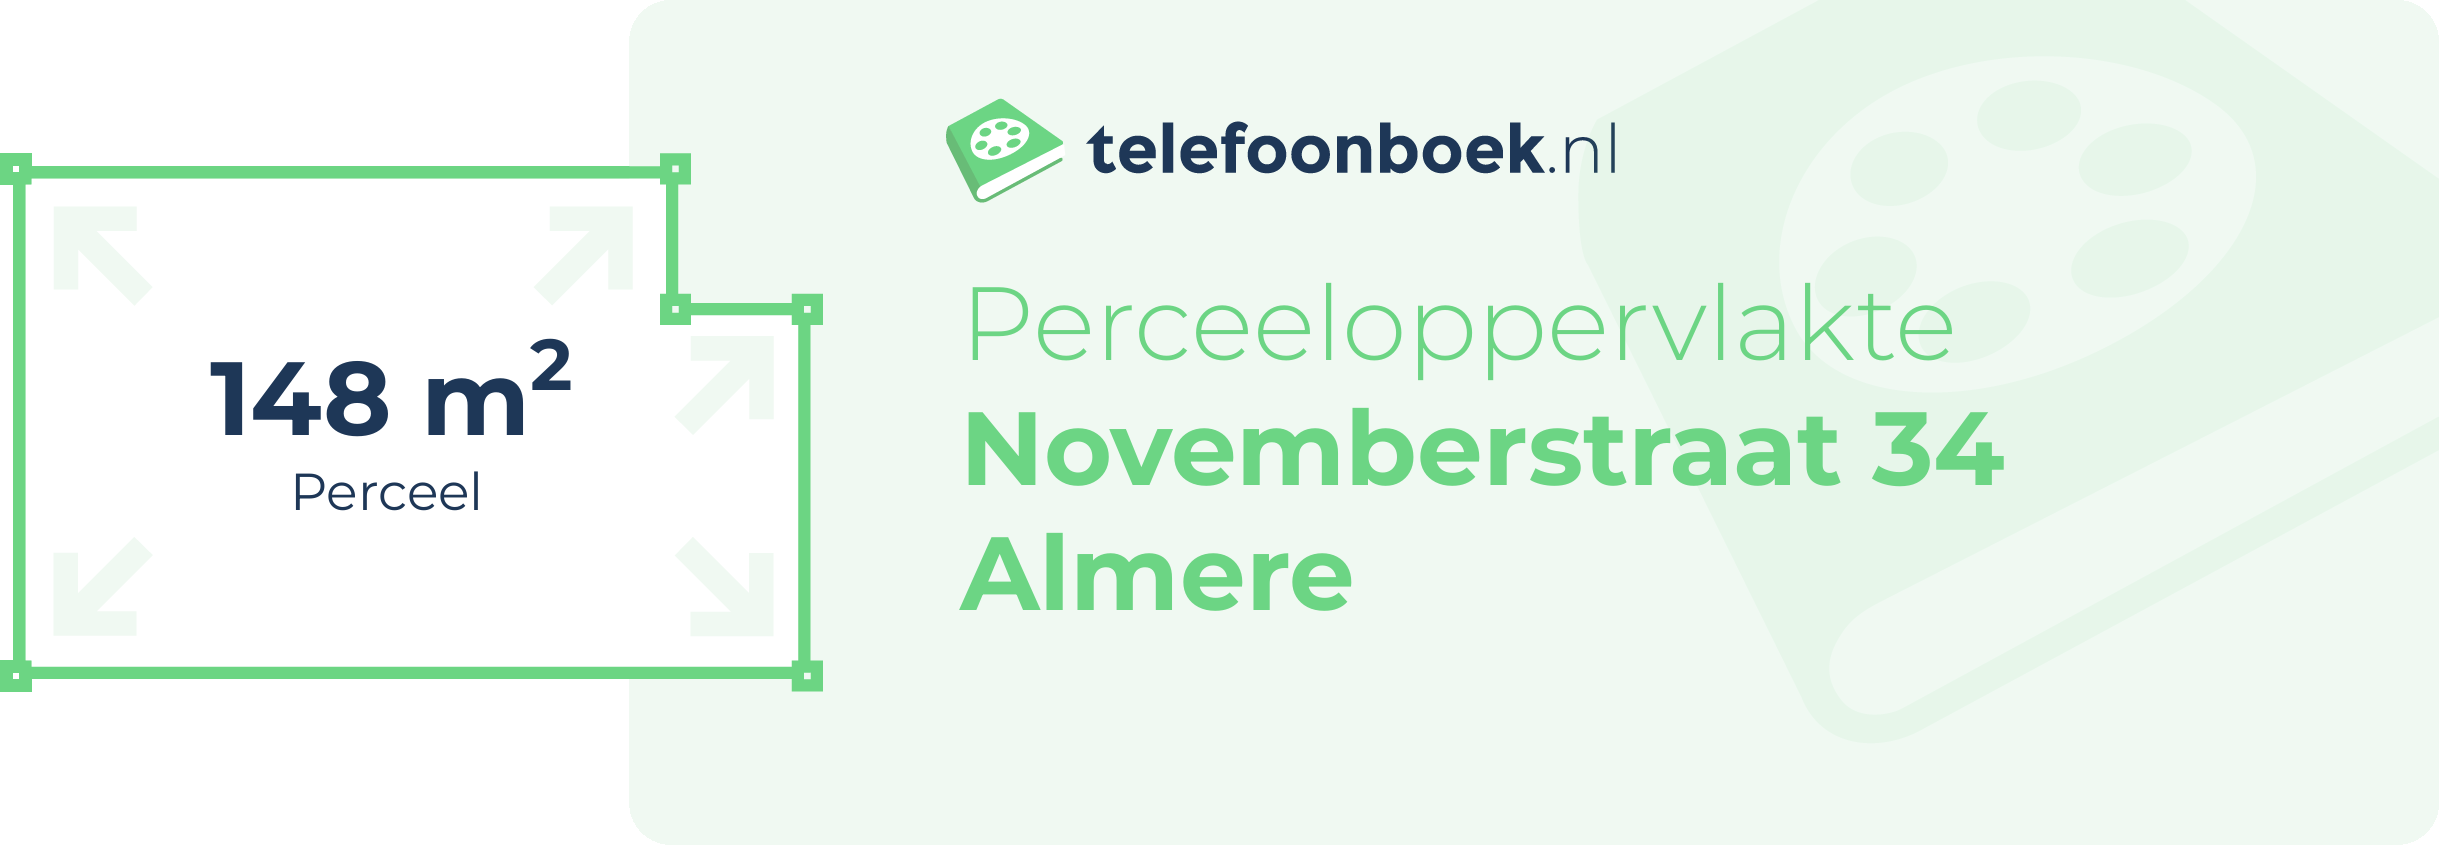 Perceeloppervlakte Novemberstraat 34 Almere